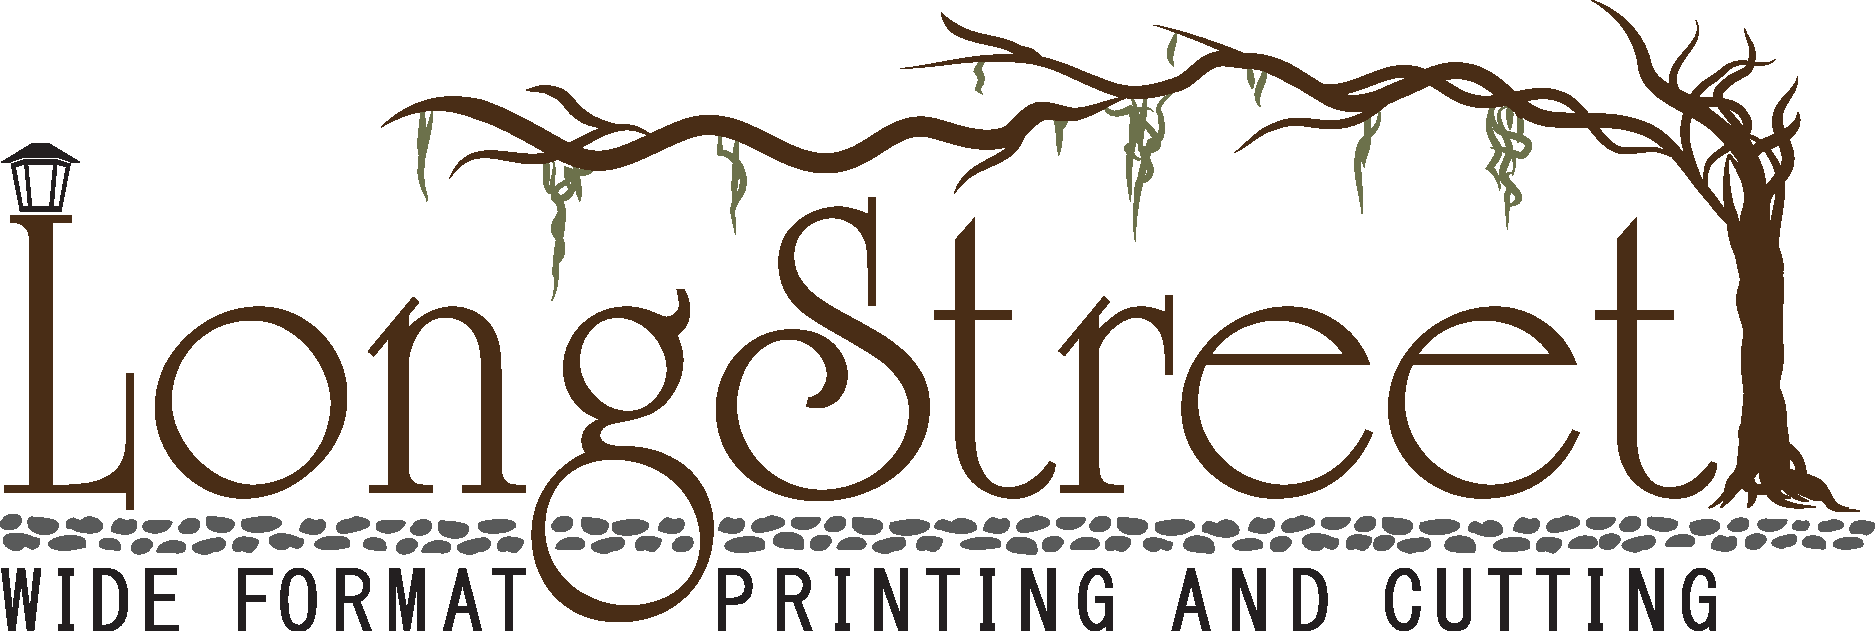 LongStreet Printing Logo Vector